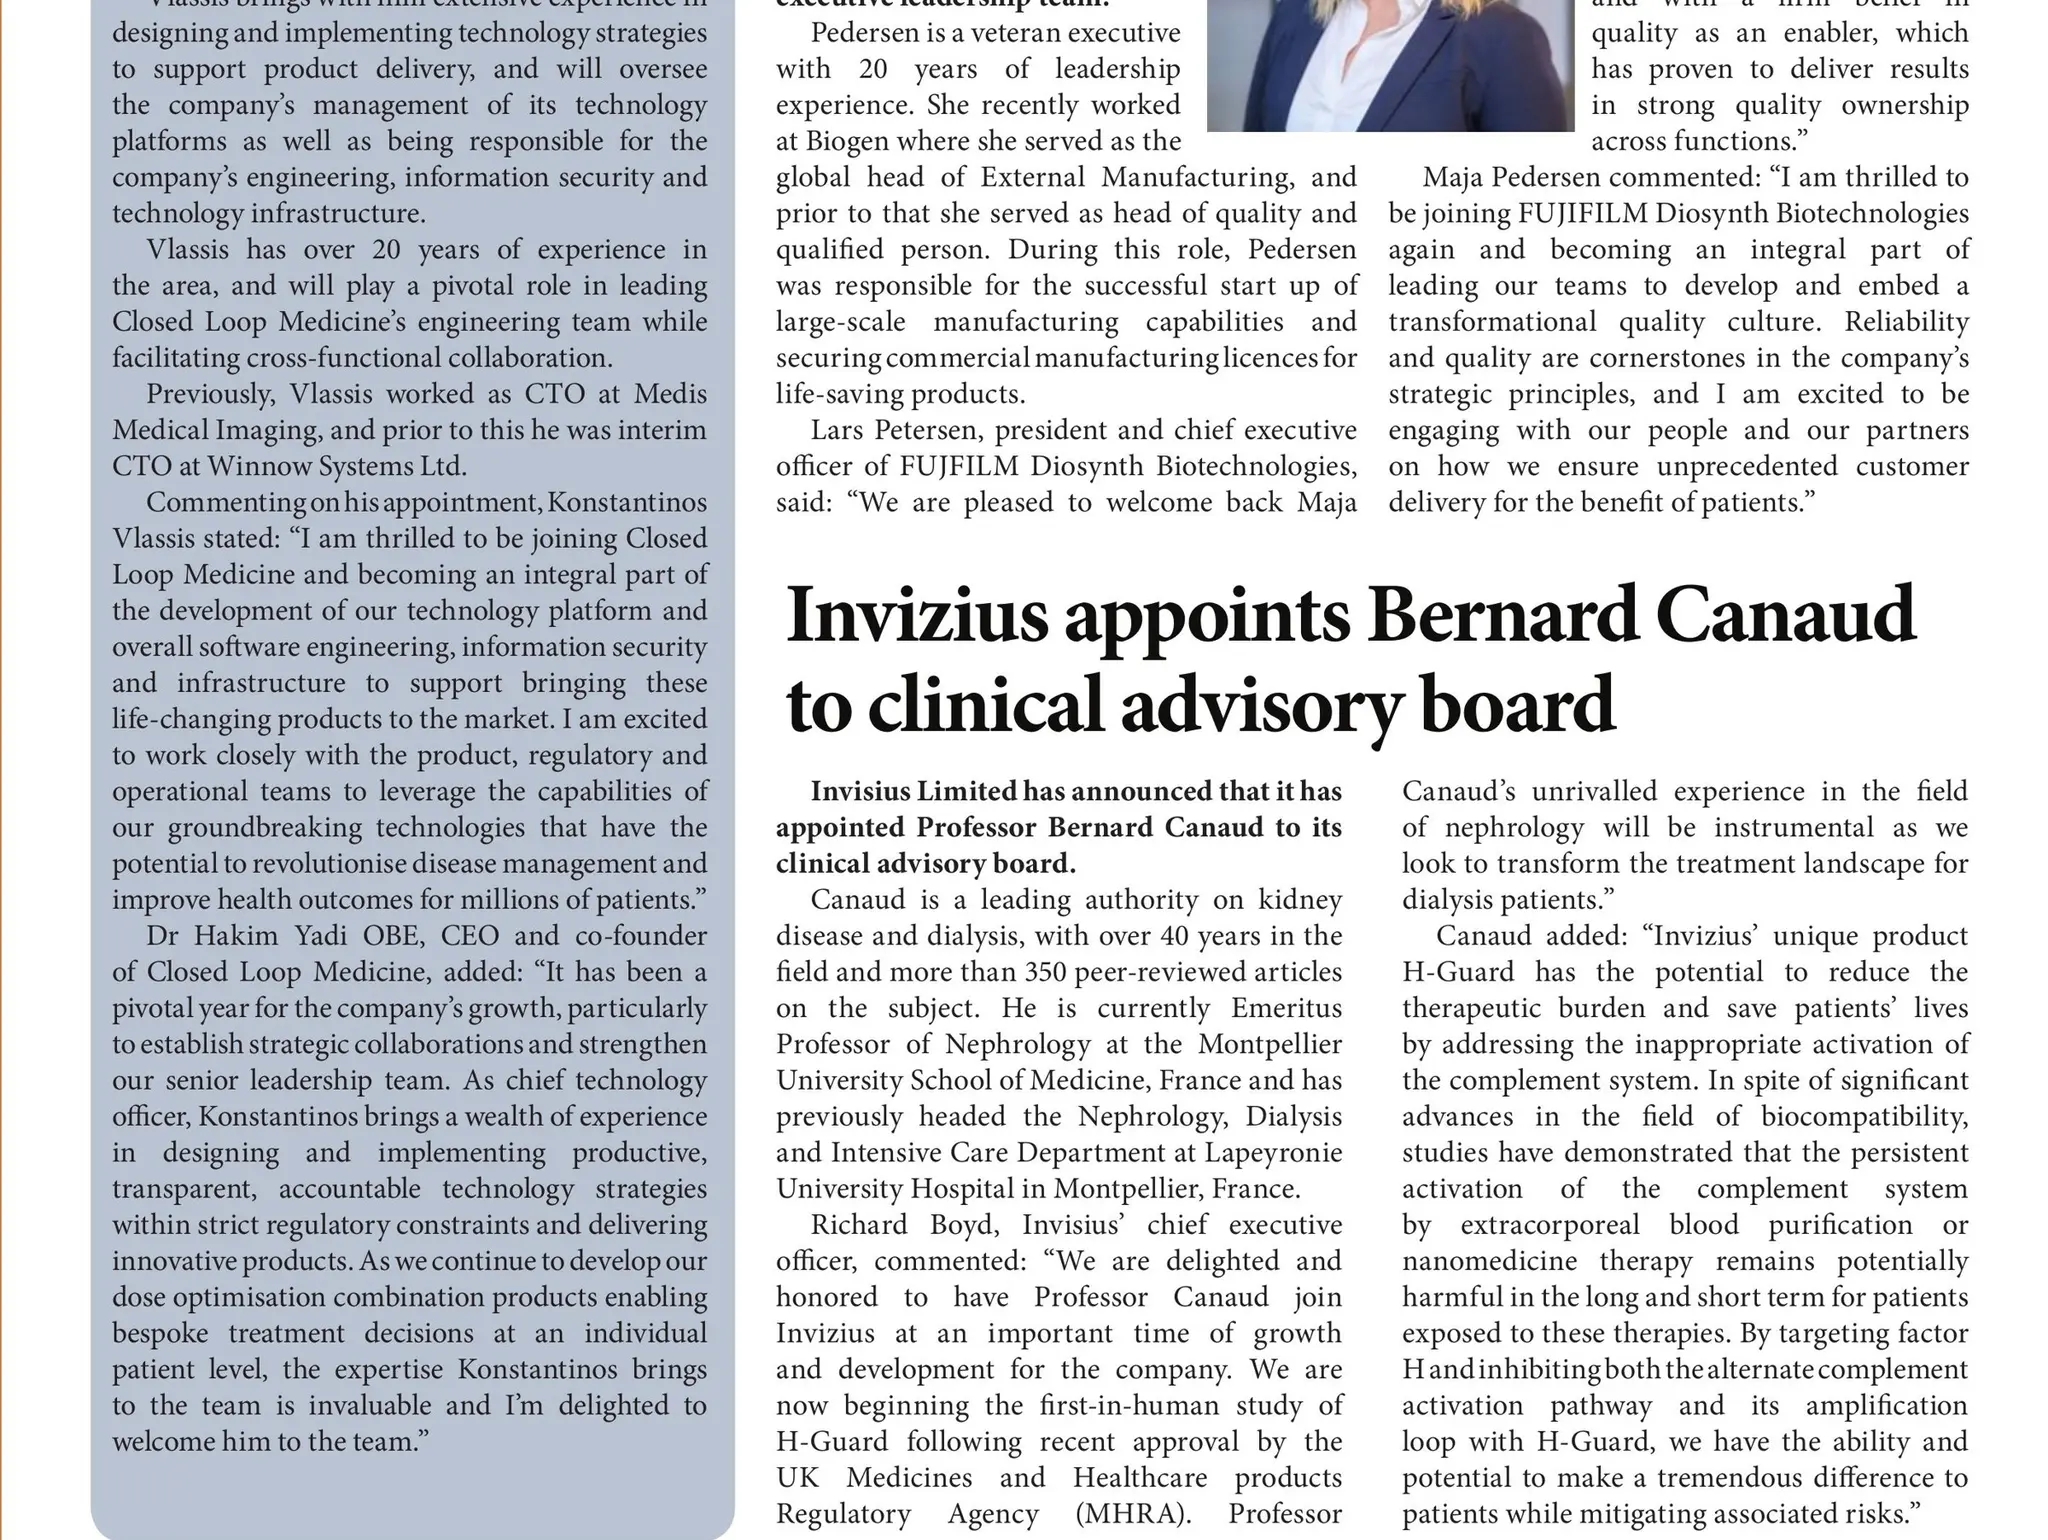 Invizius appoints Bernard Canaud to clinical advisory board